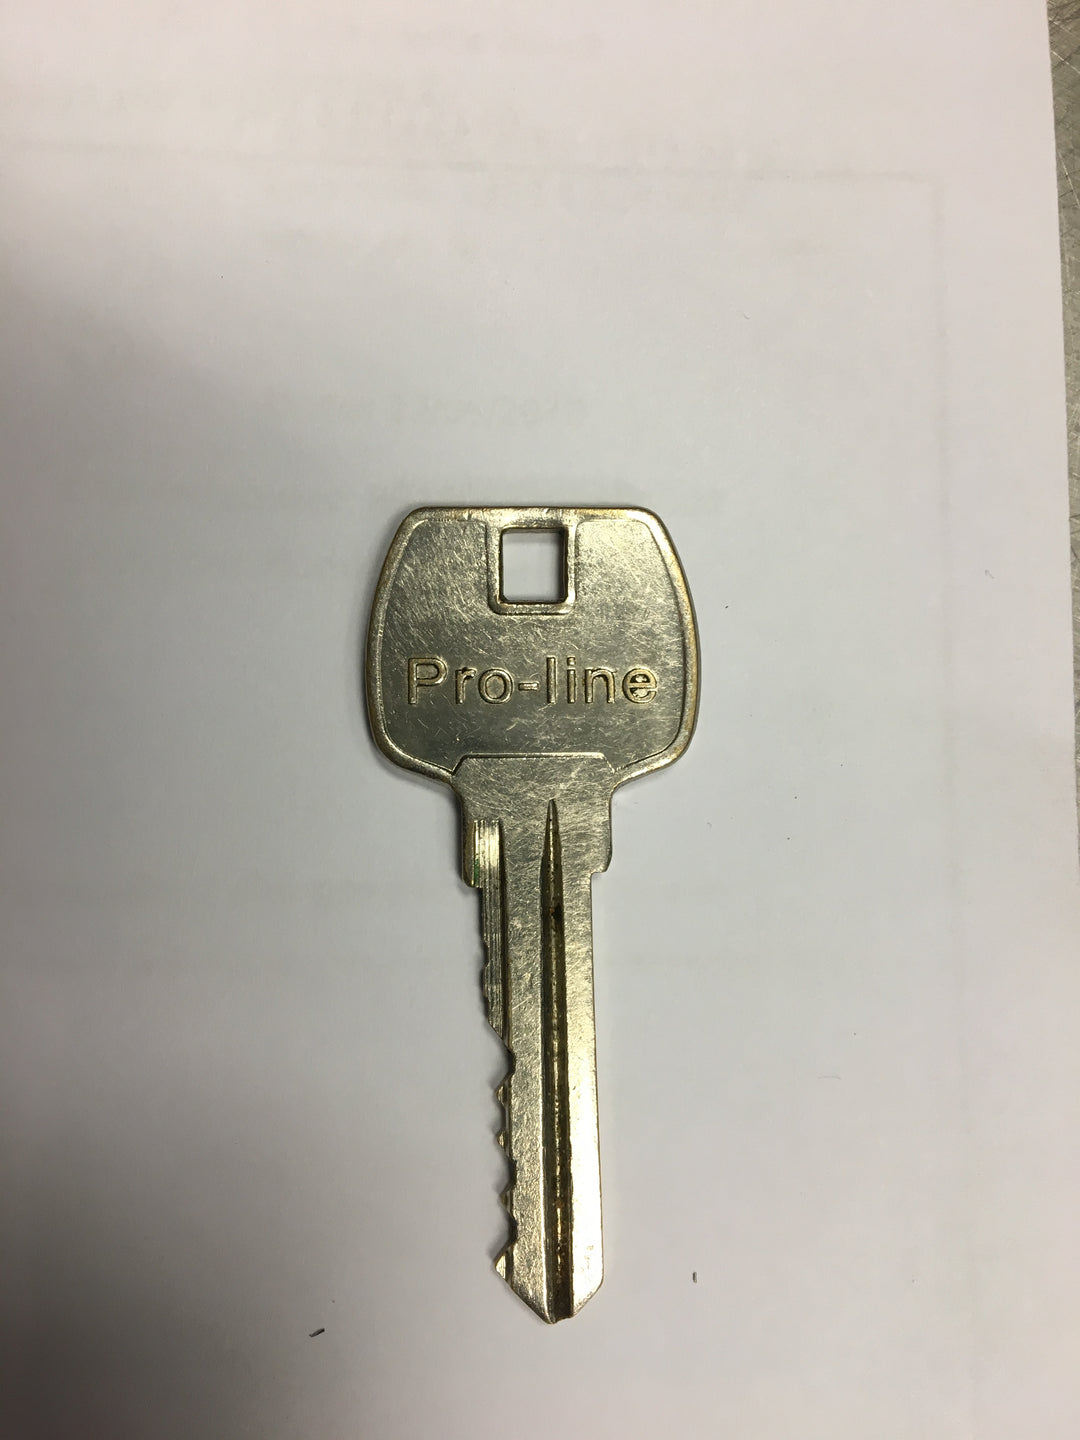 proline key